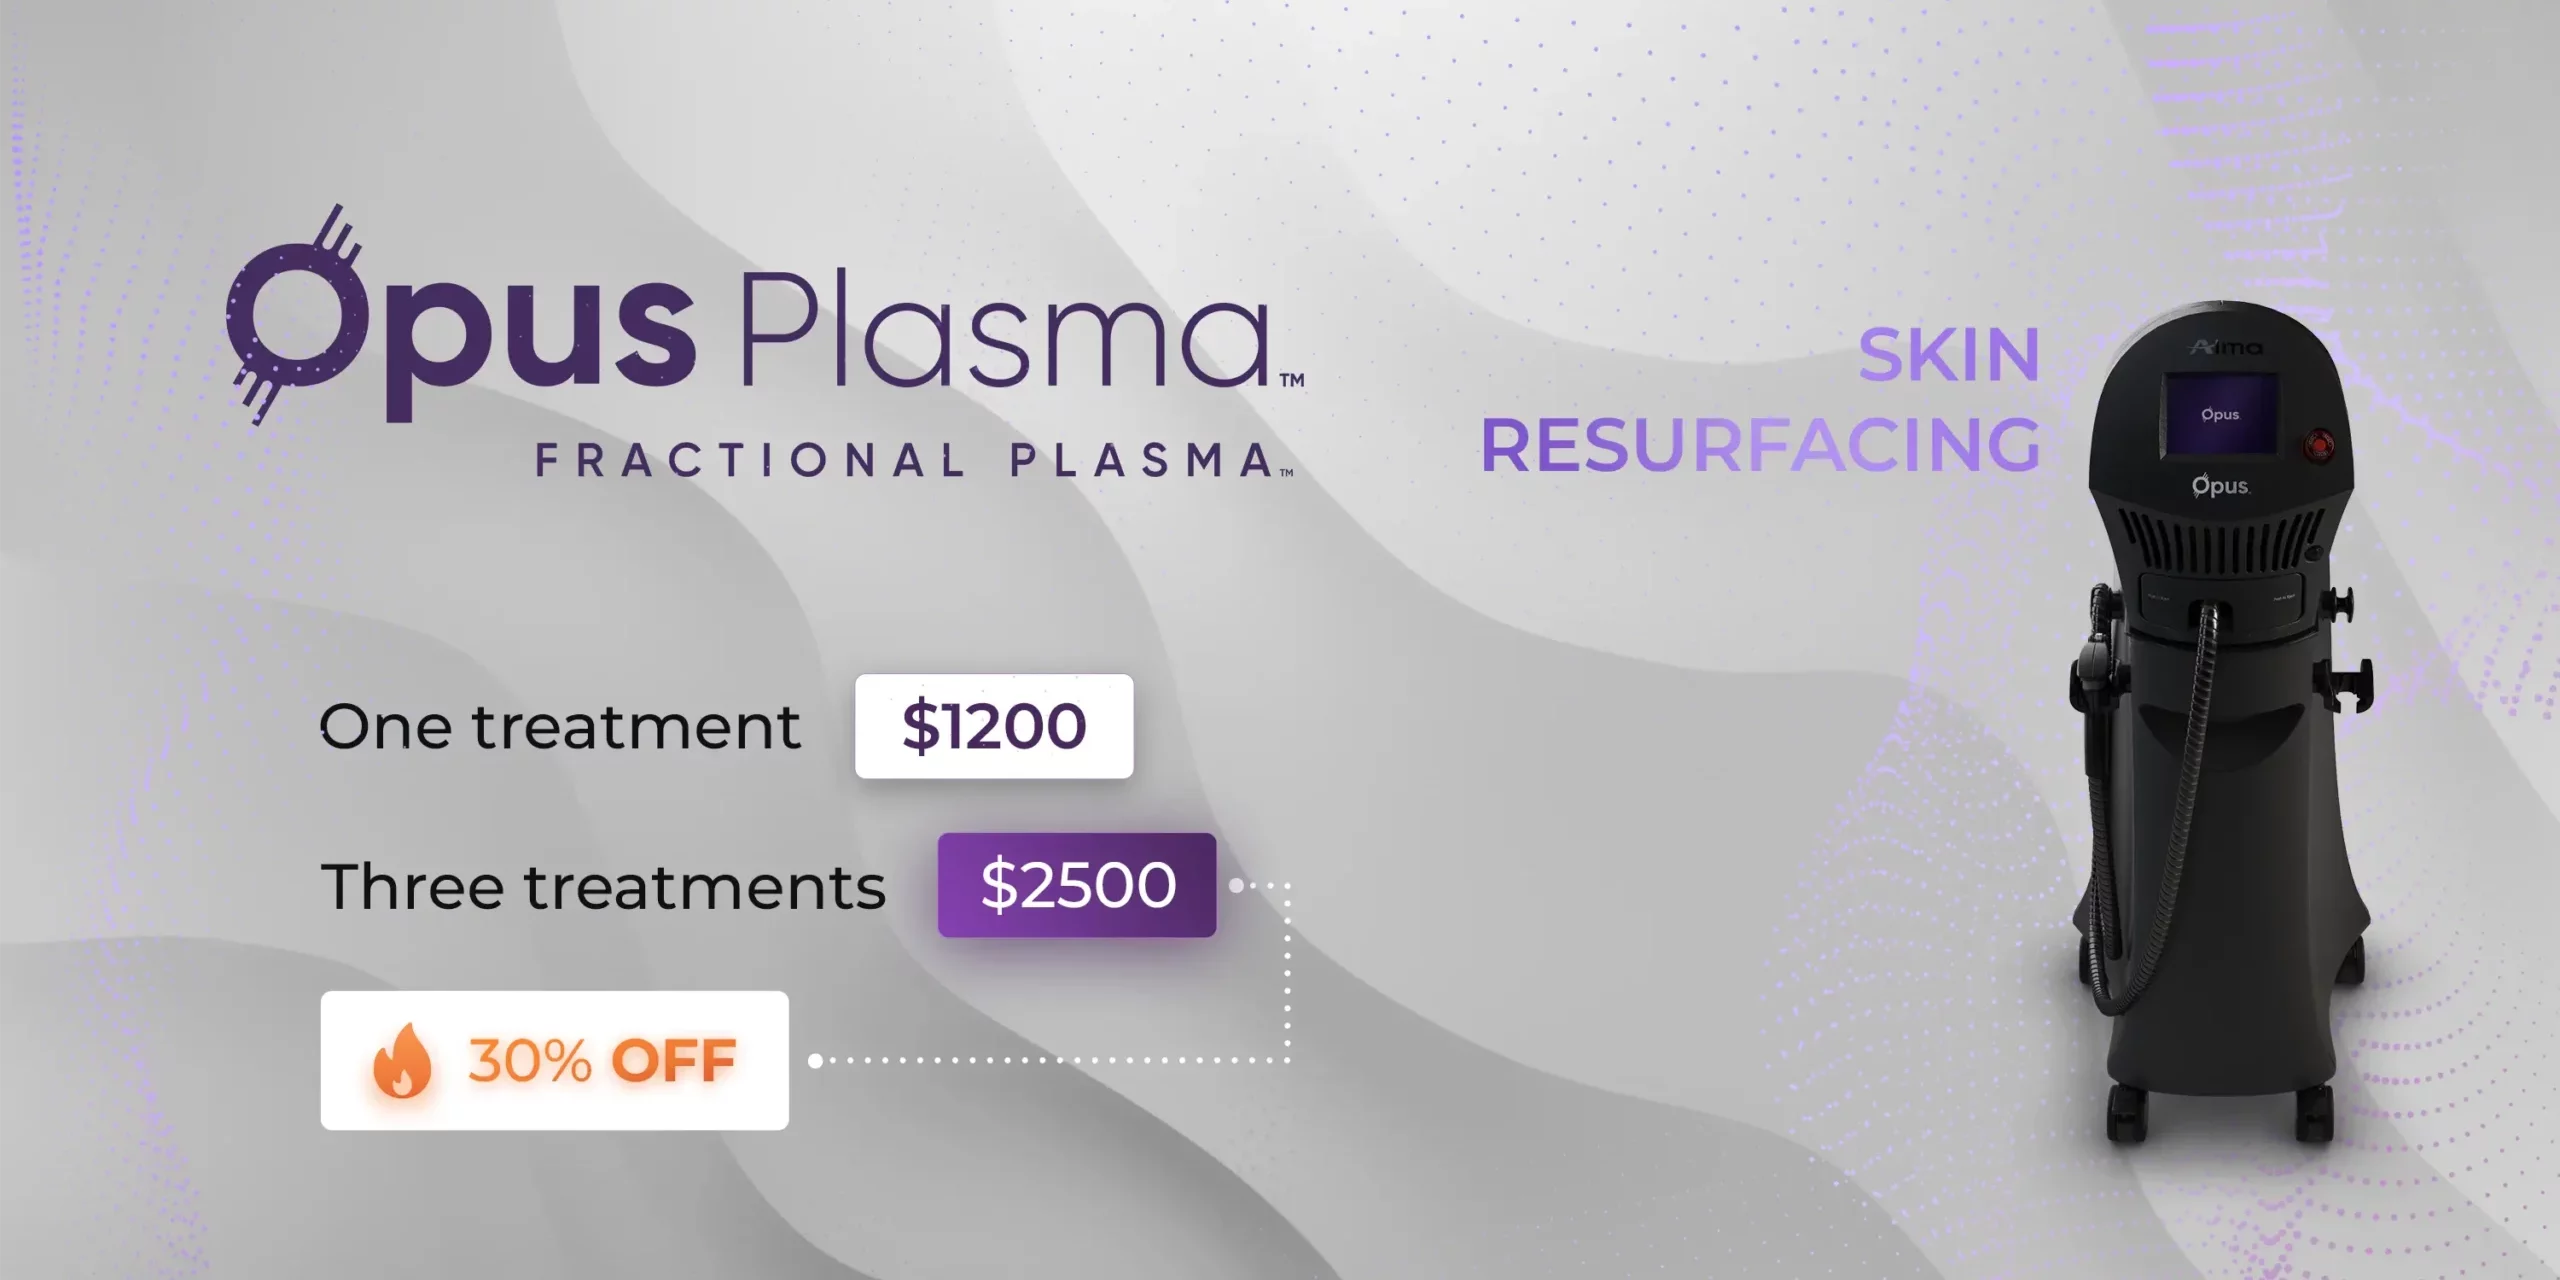 Opus plasma offer 30% off: One treatment - $1200; Three treatments - $2500